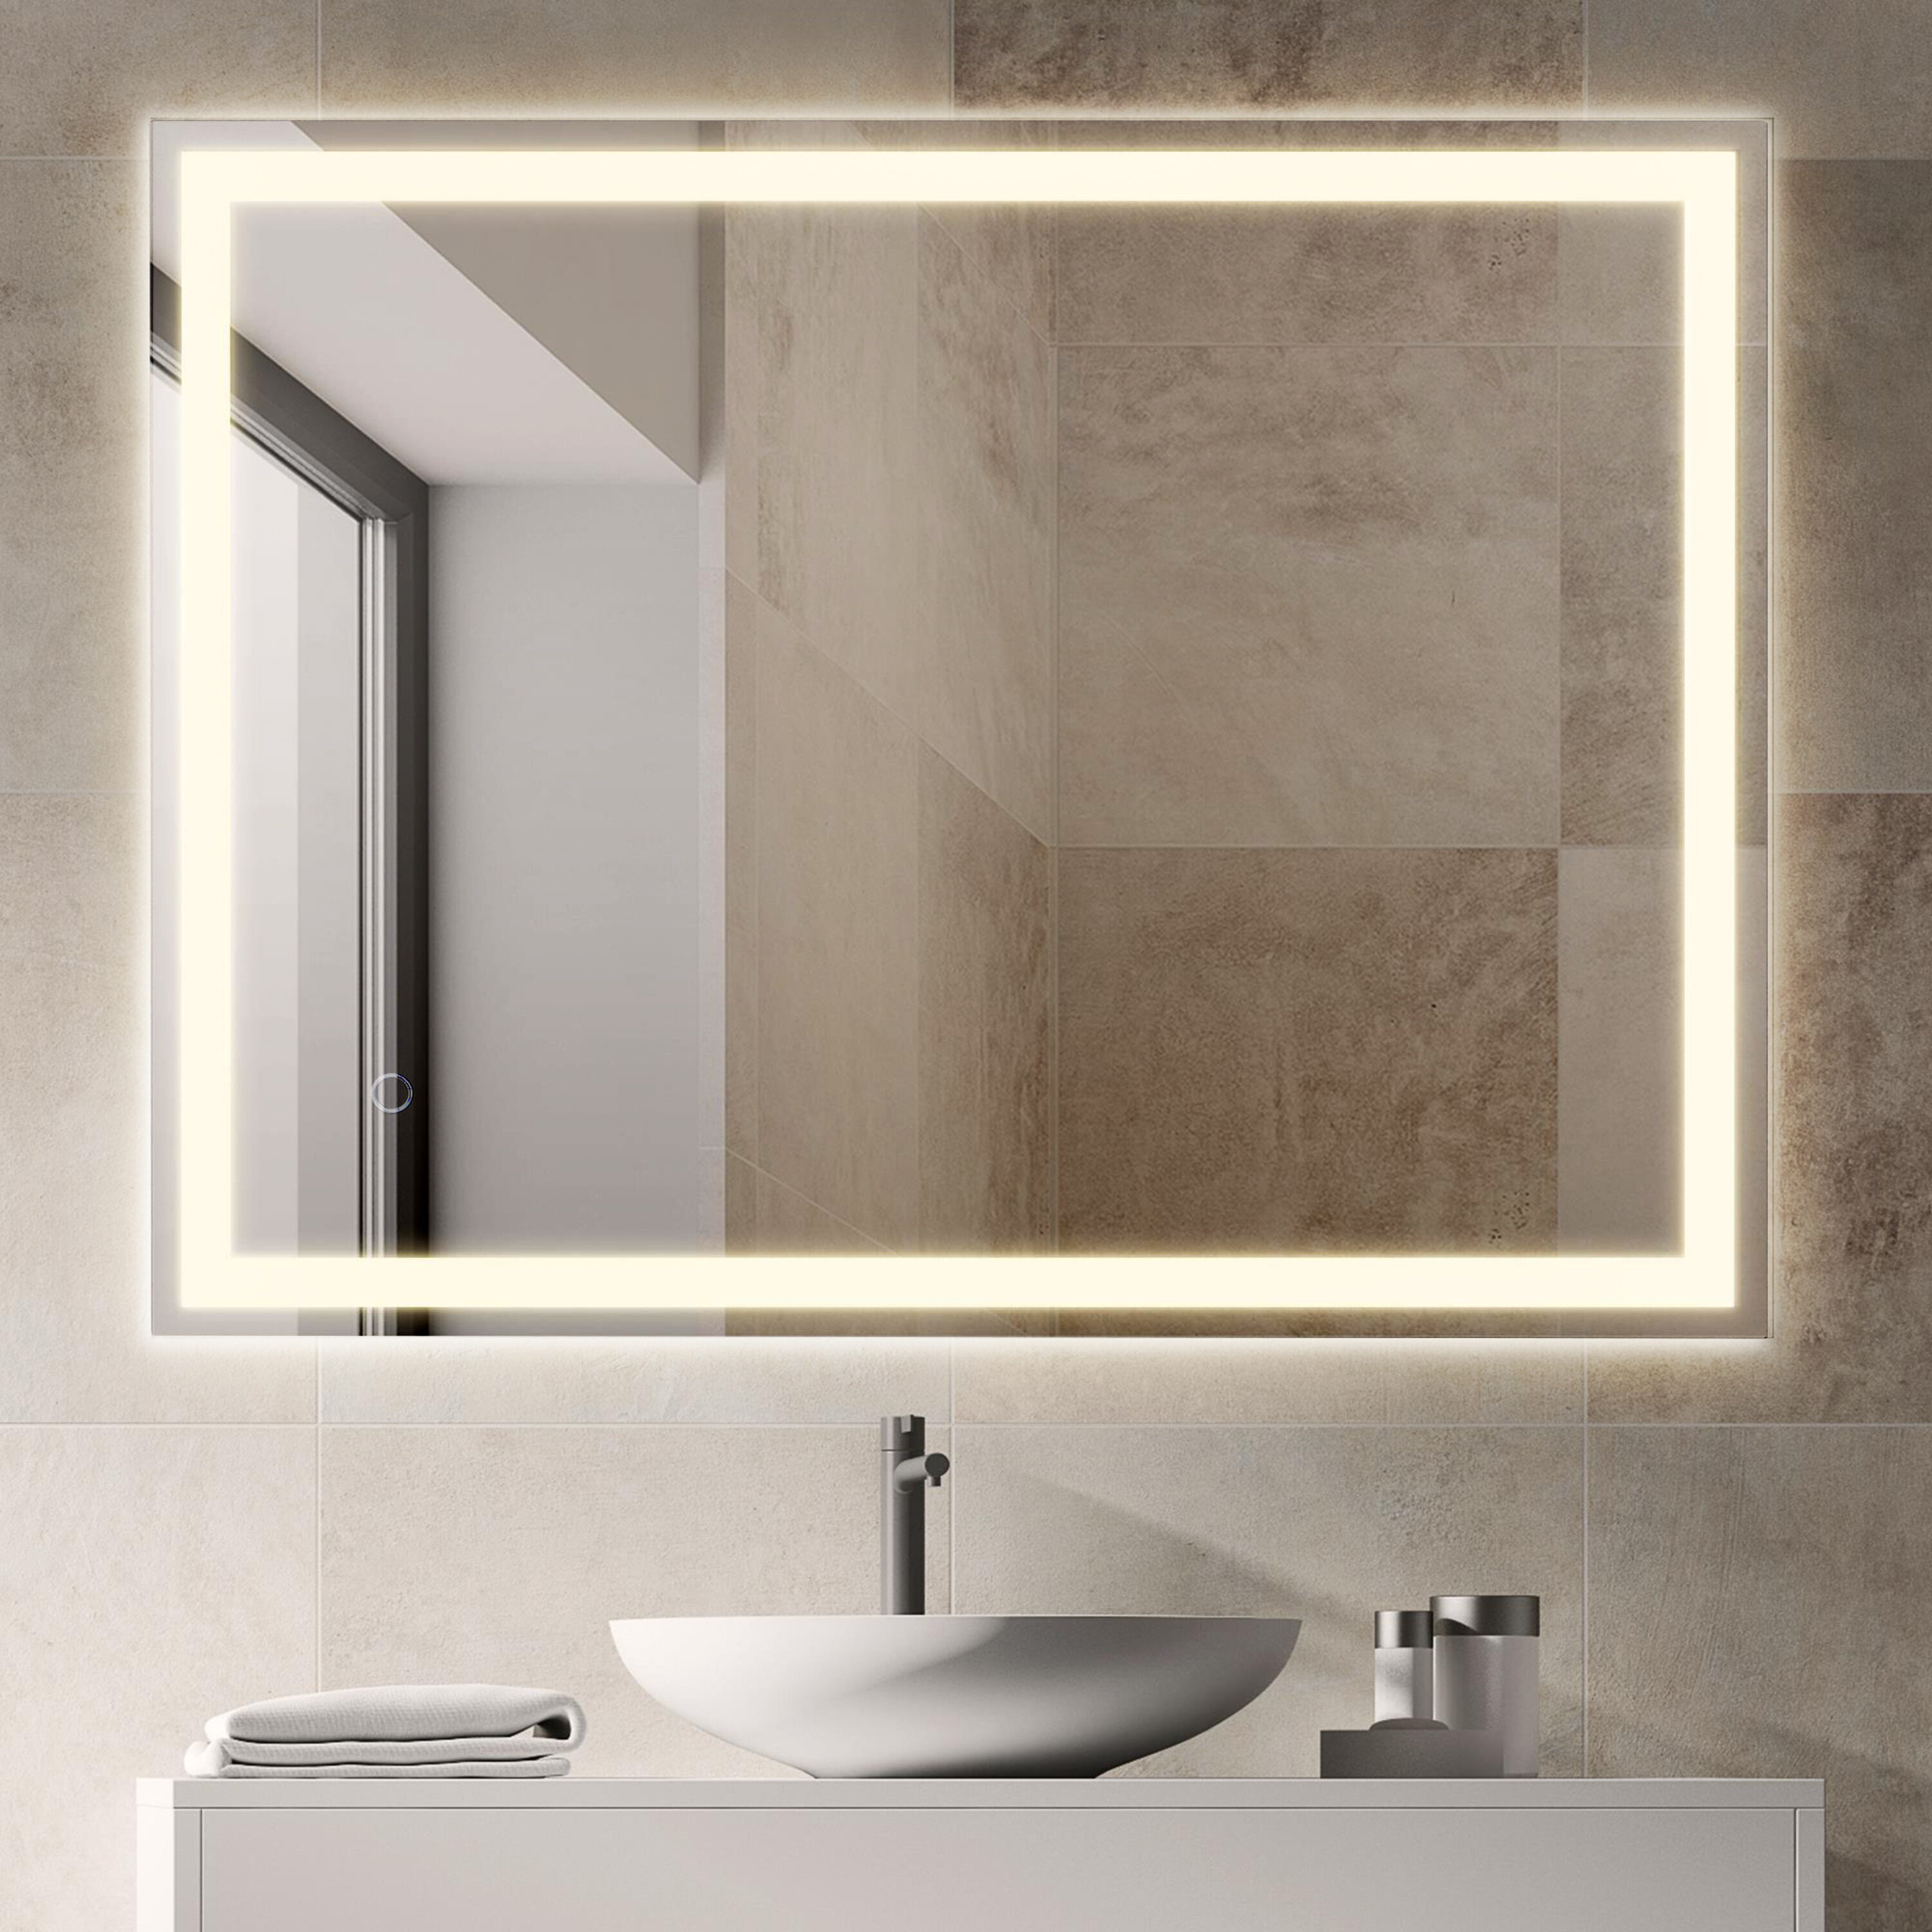 32x 24 Organnice Frameless Anti-Fog Bathroom Vanity Mirror with Dimmable Light